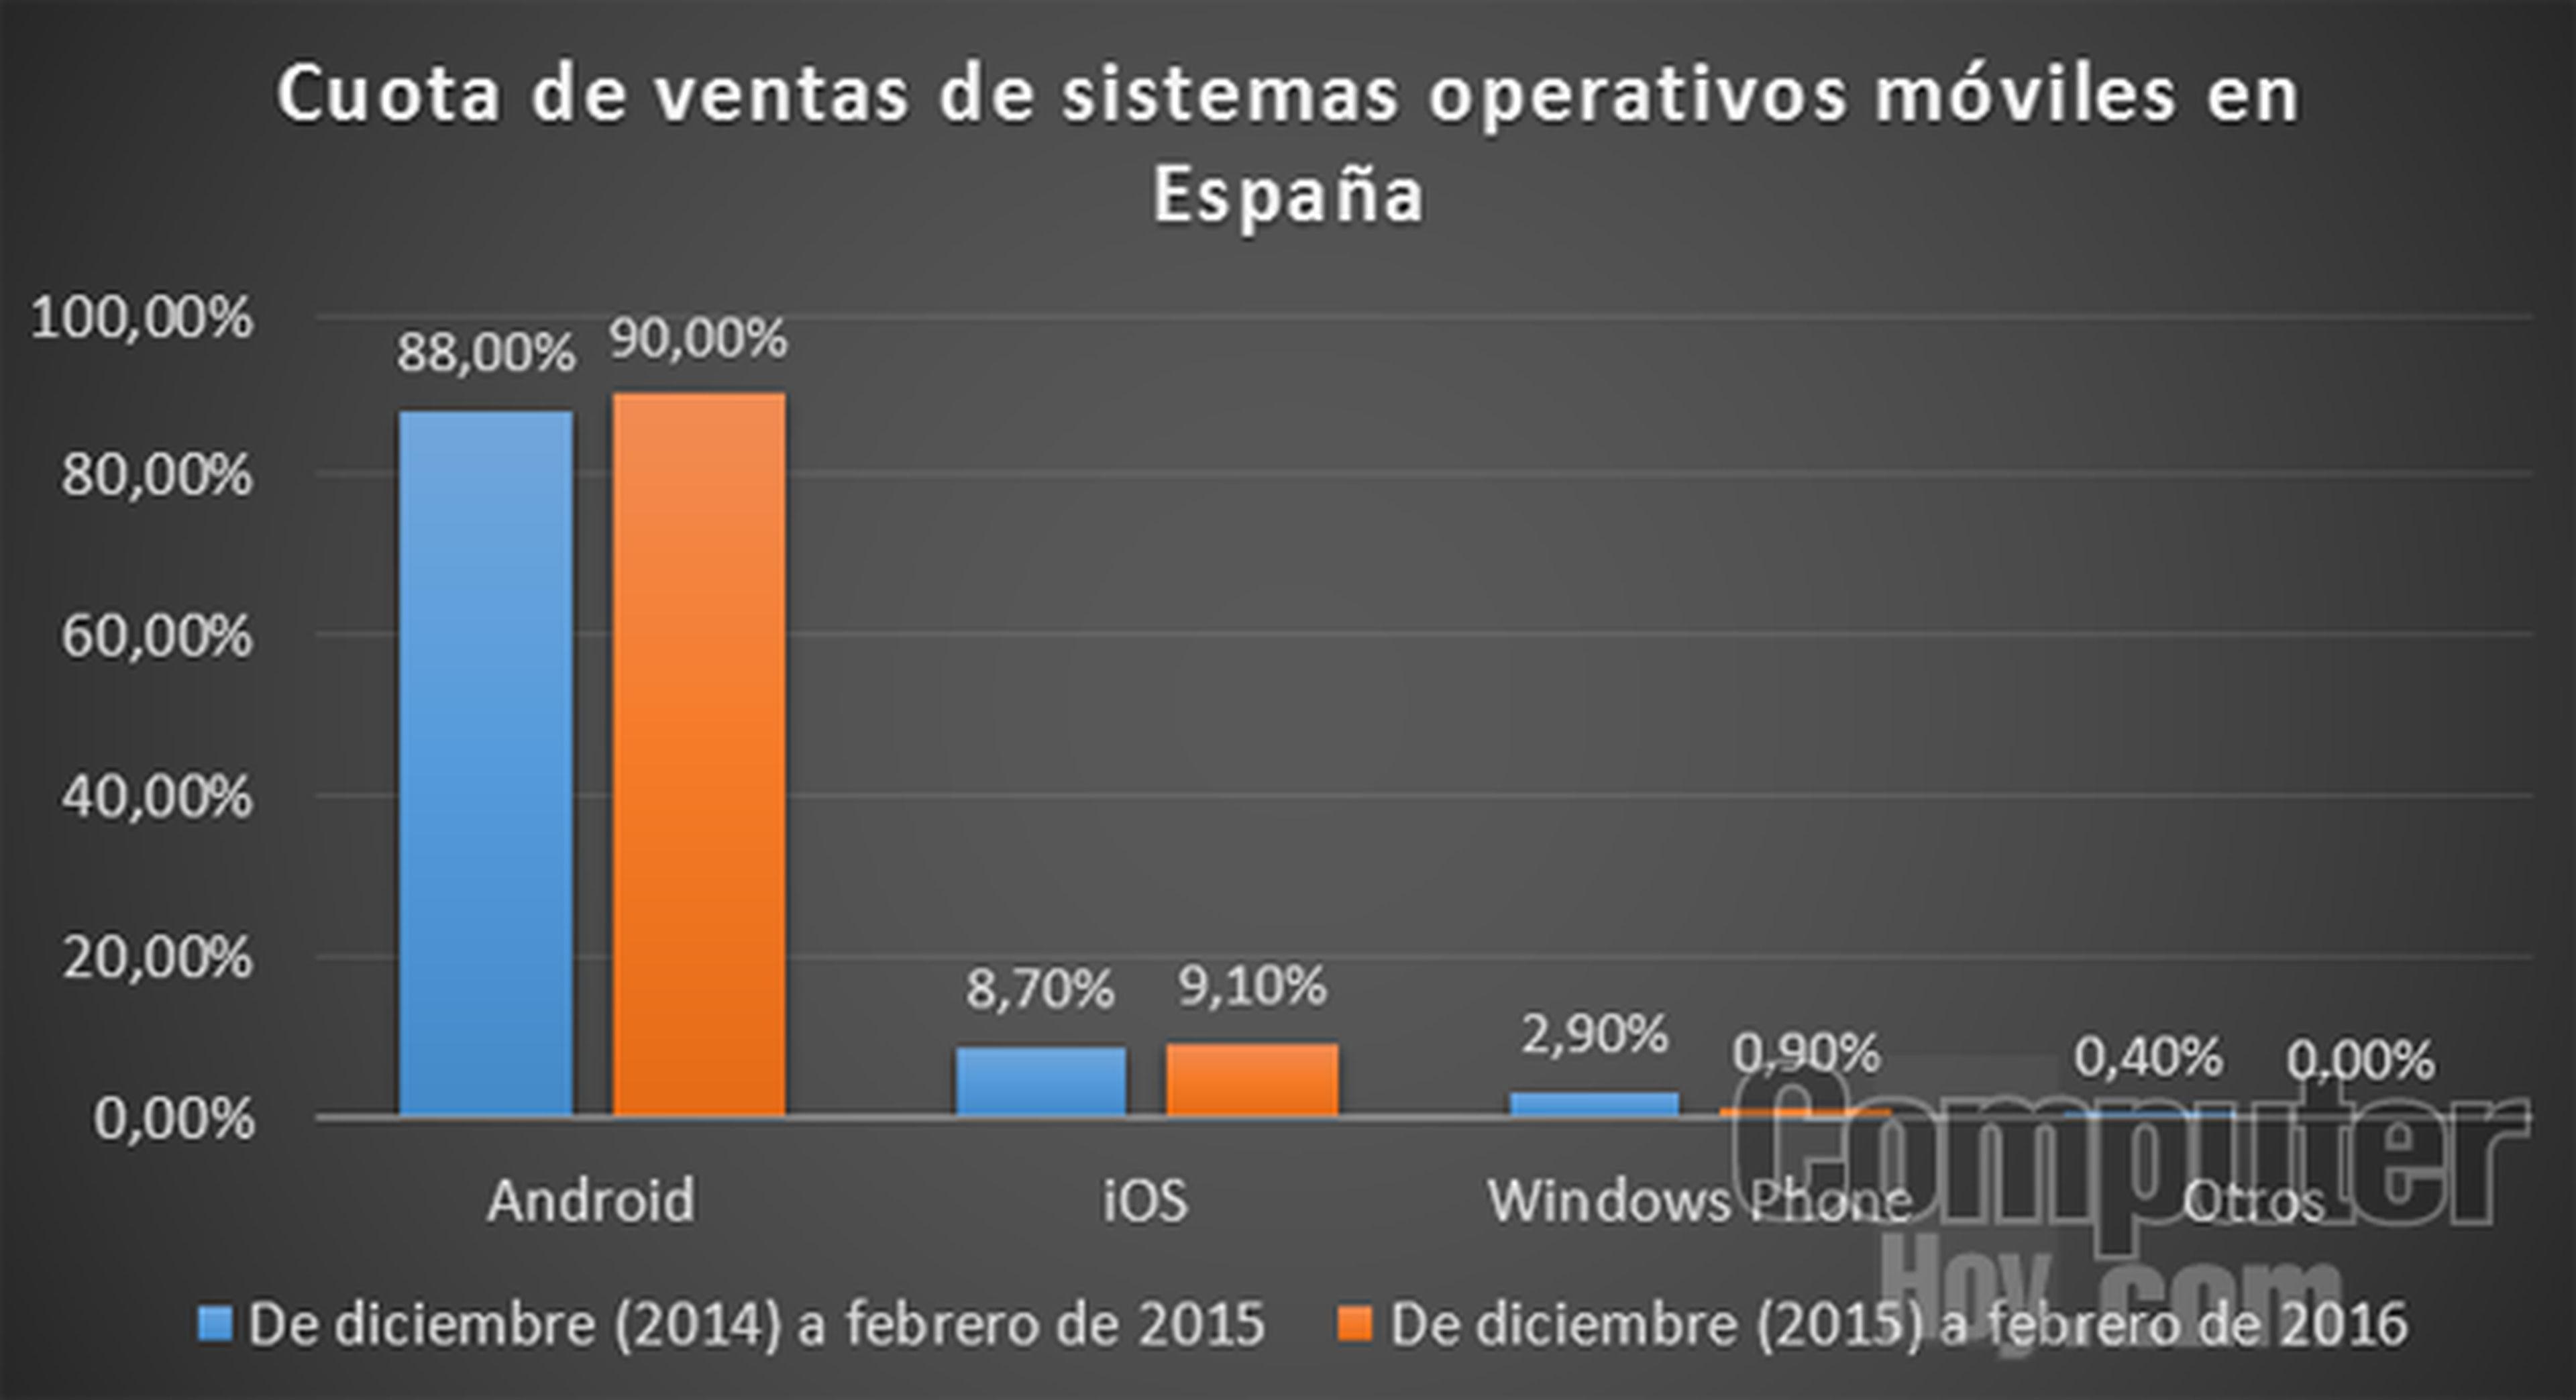 Cuota de venta de sistema operativos móviles en España desde diciembre de 2015 a febrero de 2016